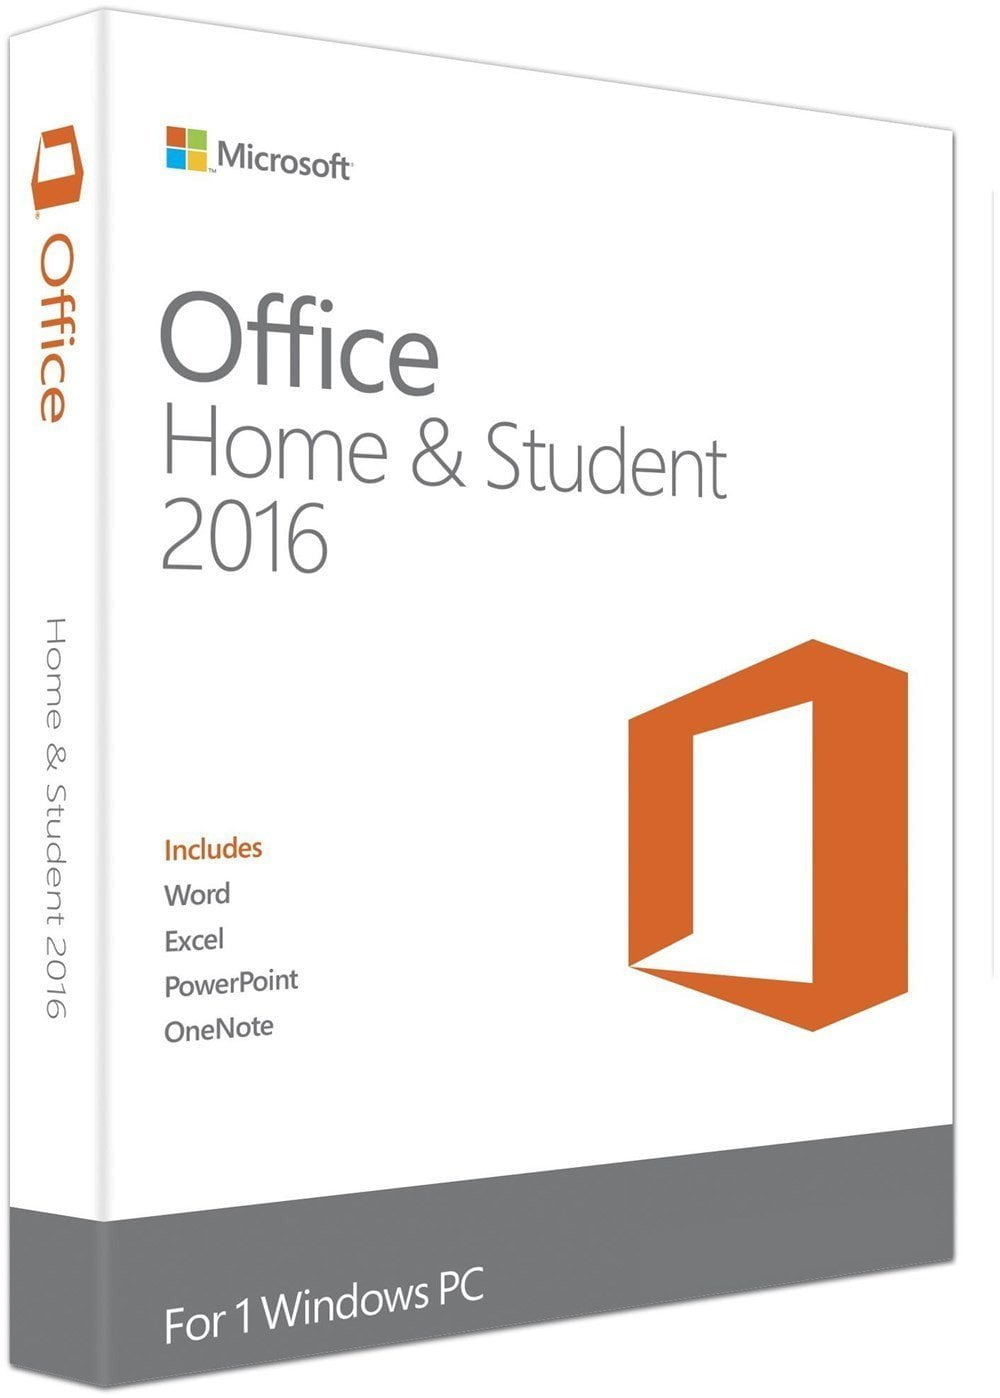 Microsoft Microsoft Office Home & Student 2016 (1 PC Download Key)